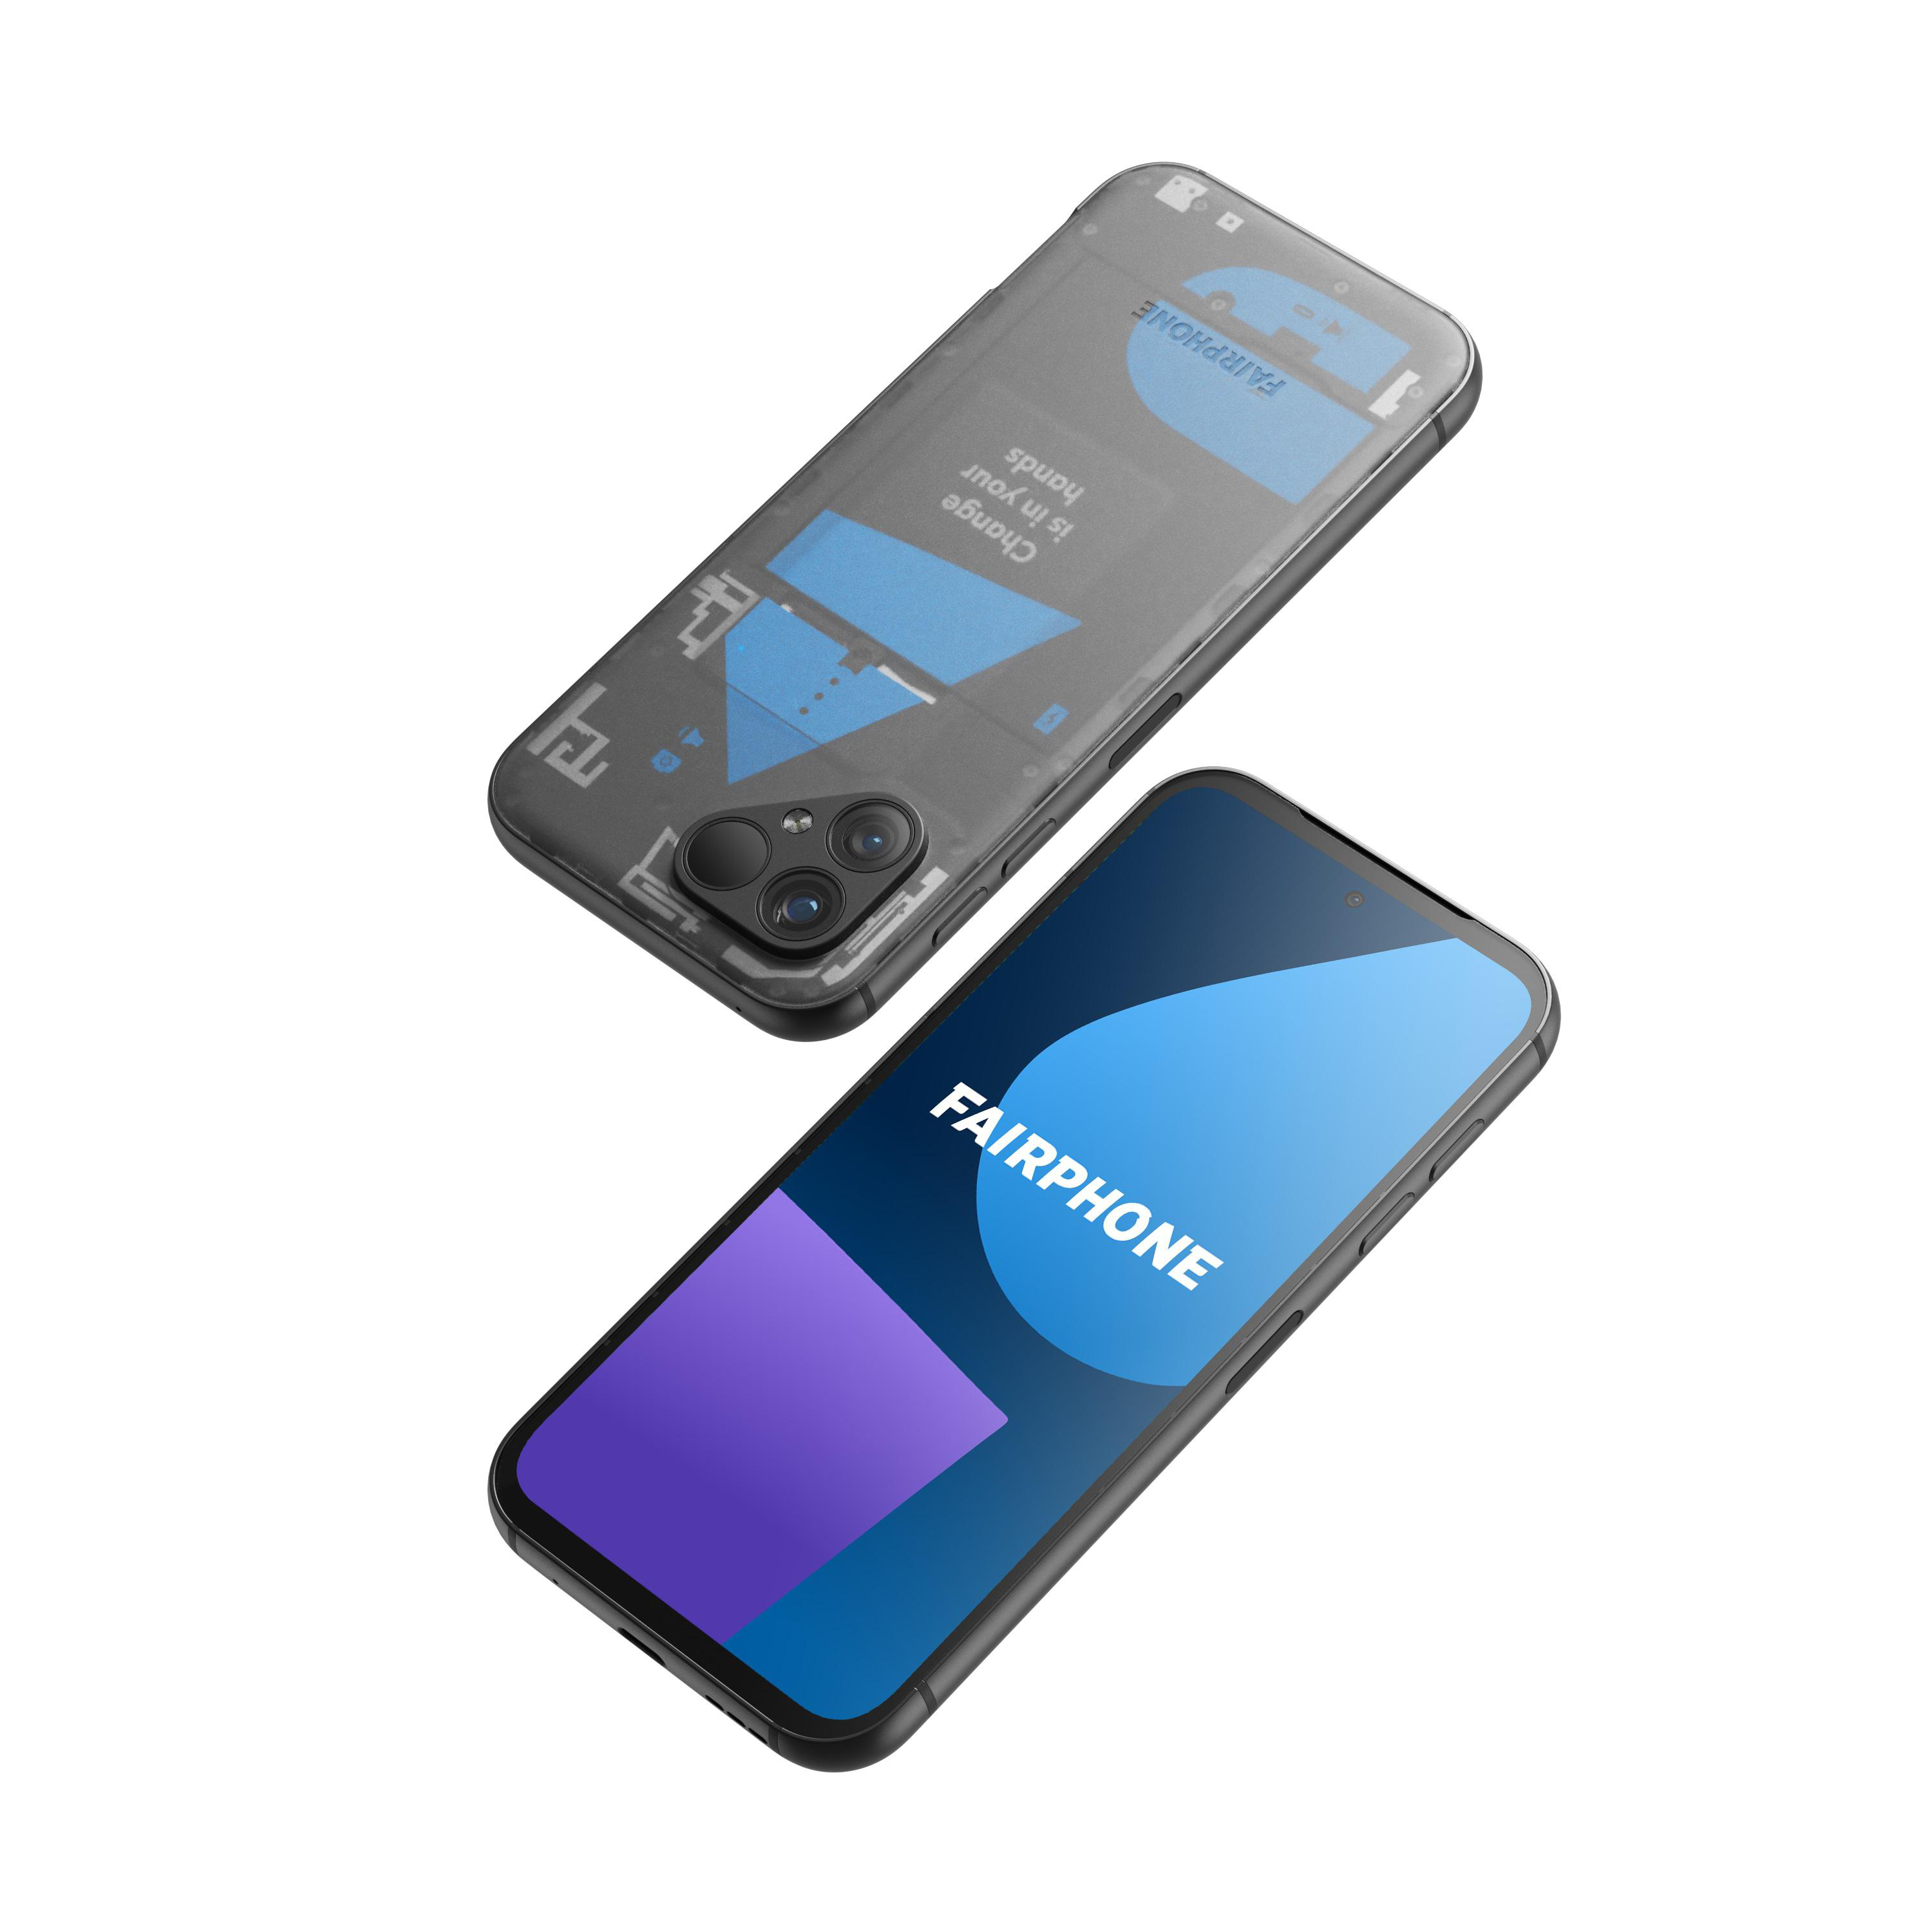 FAIRPHONE Dual 256 Transparent 5 GB SIM